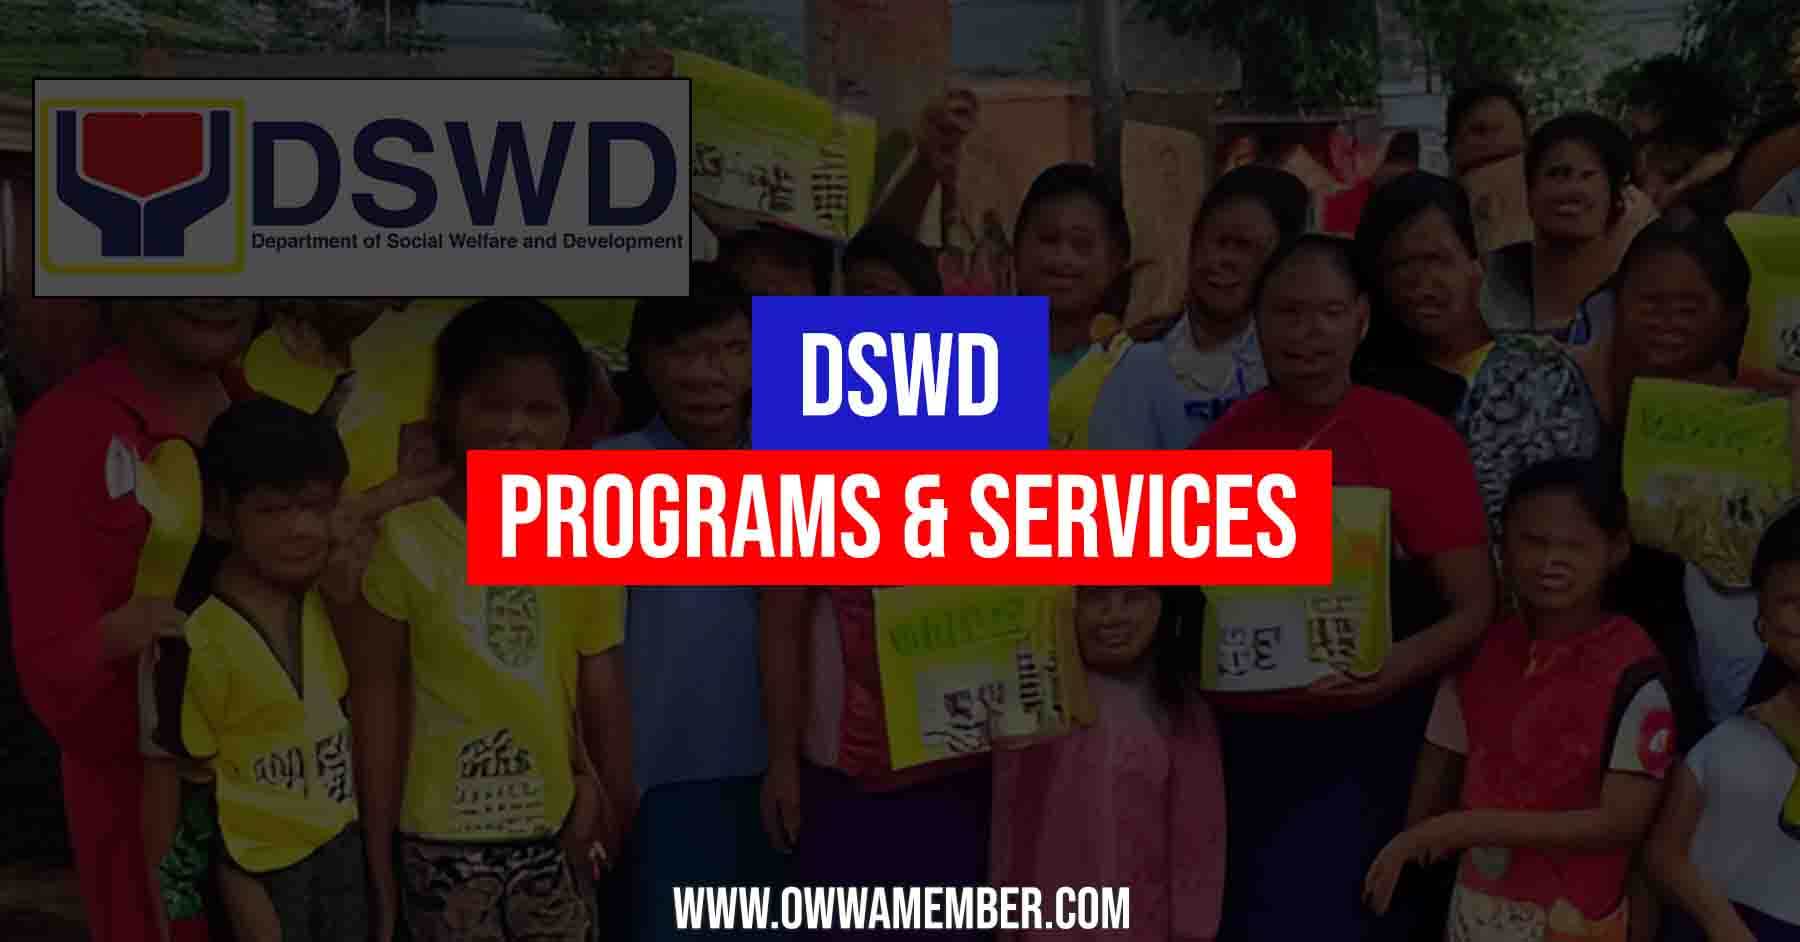 department of social welfare and development